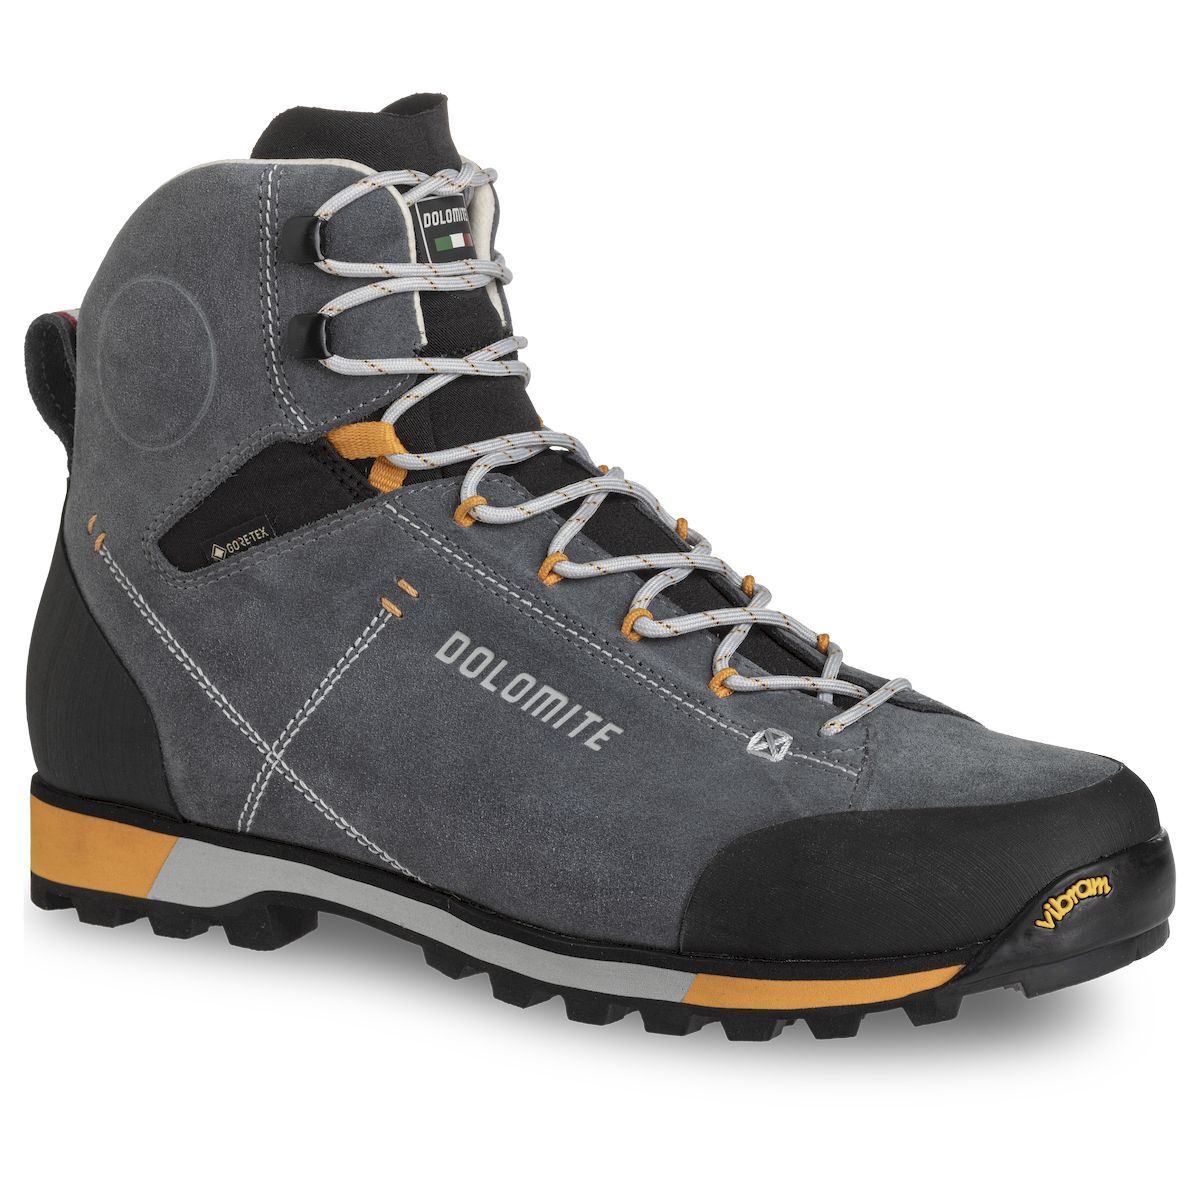 Dolomite 54 Hike EVO GTX - Hiking boots - Men's